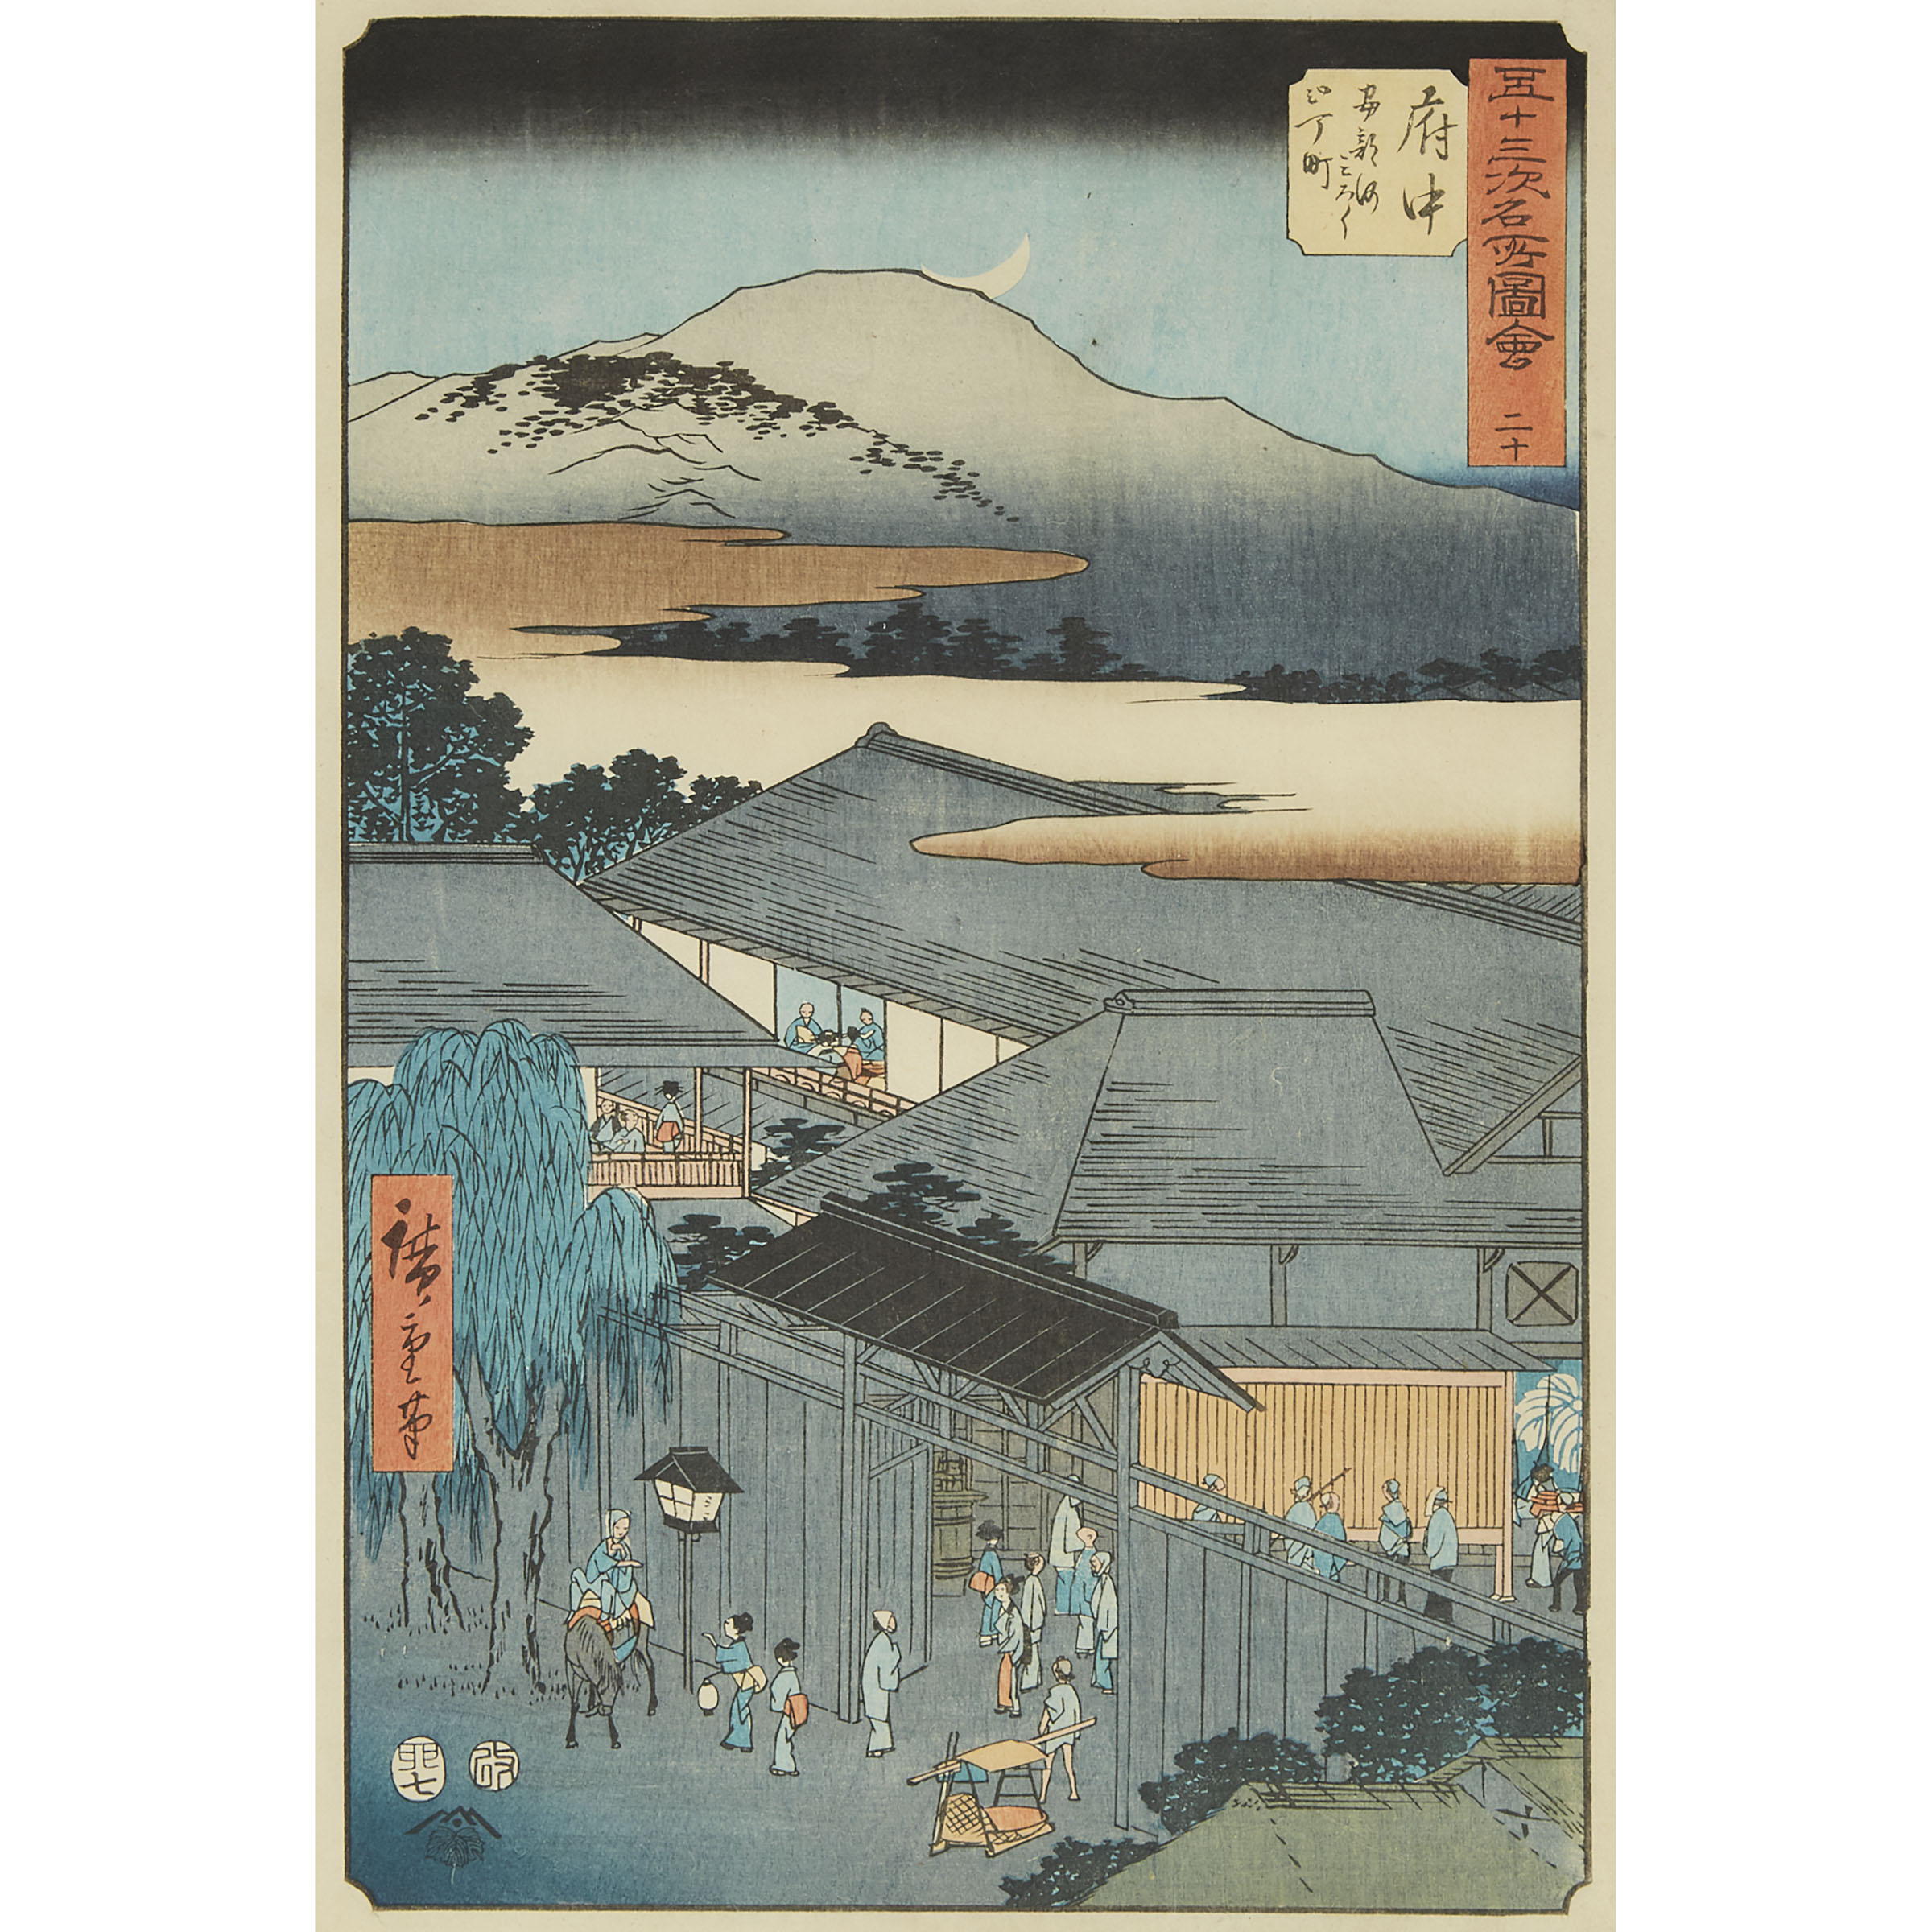 Utagawa Hiroshige (1797-1858), Fuchu, Edo Period (1615-1868), 1855